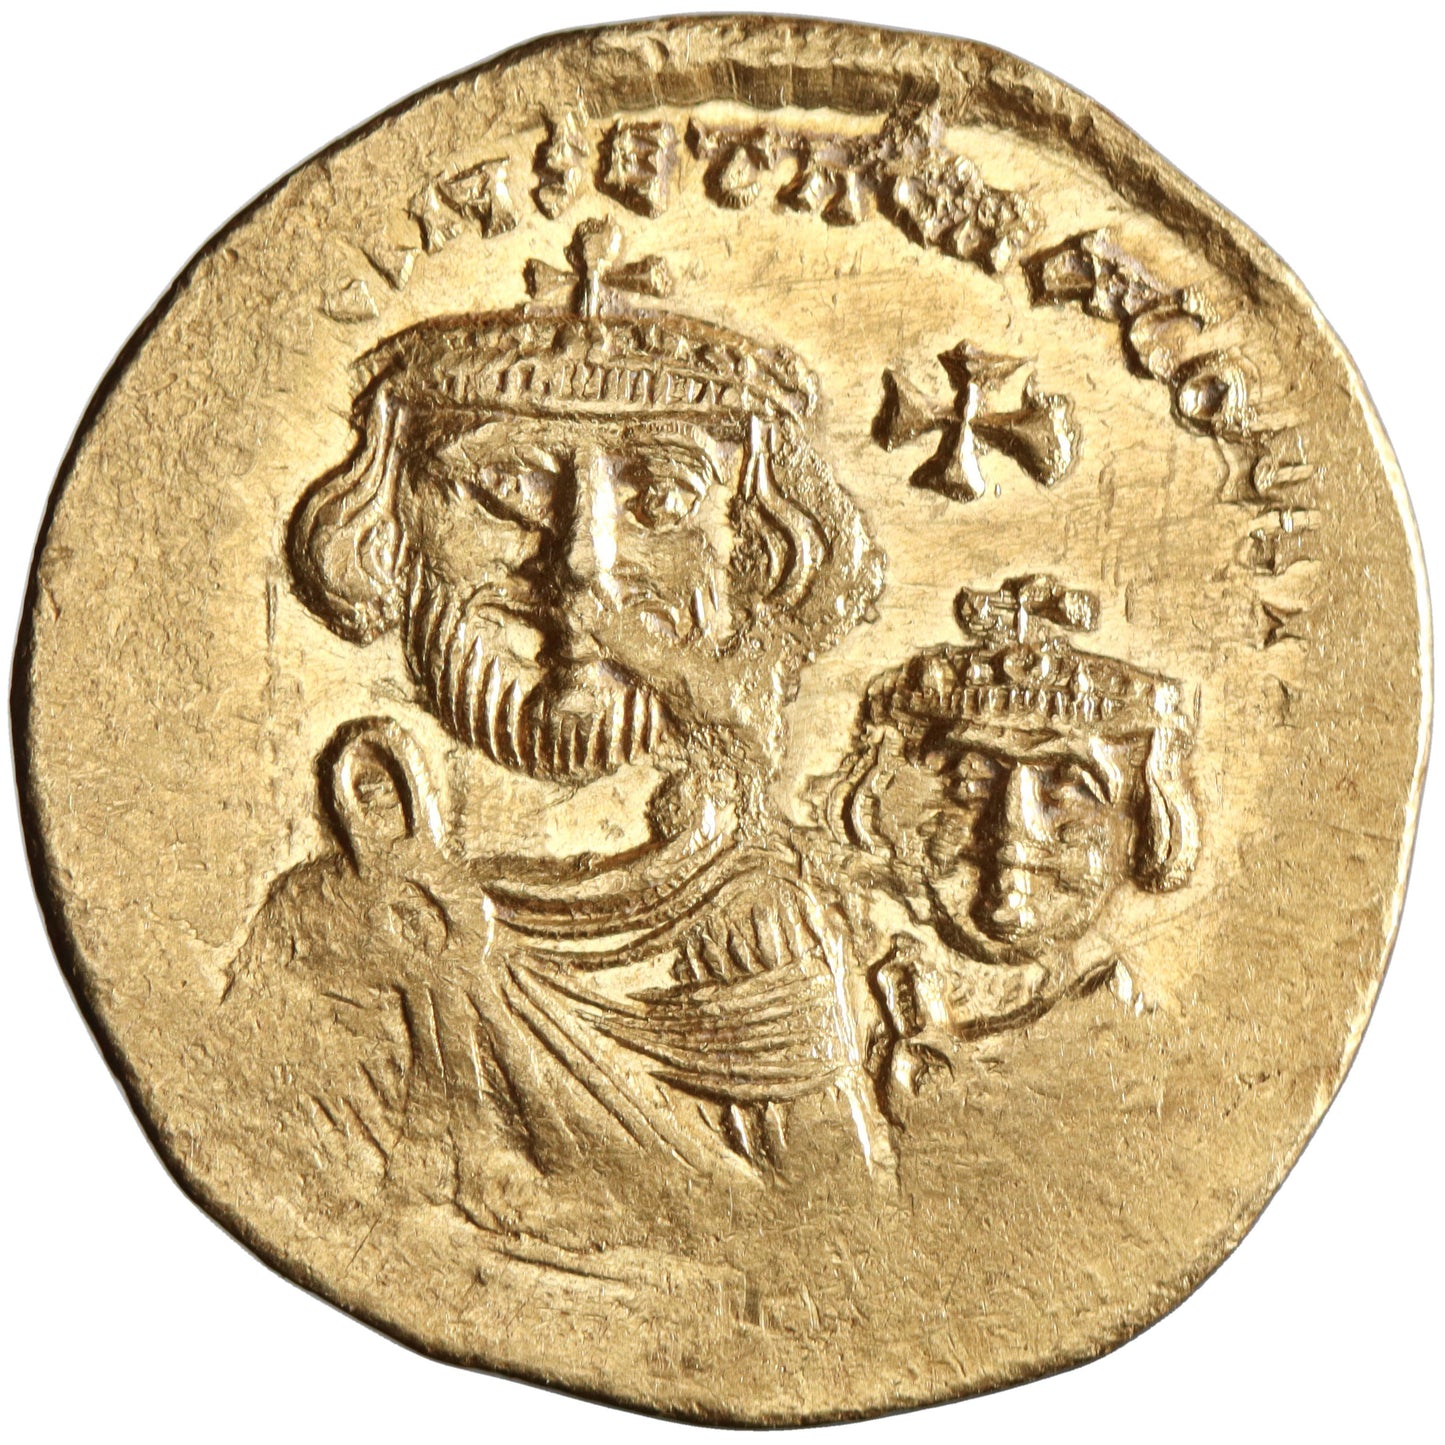 Byzantine, Heraclius, gold solidus, Constantinople mint, 613-616 CE, Heraclius and Heraclius Constantine